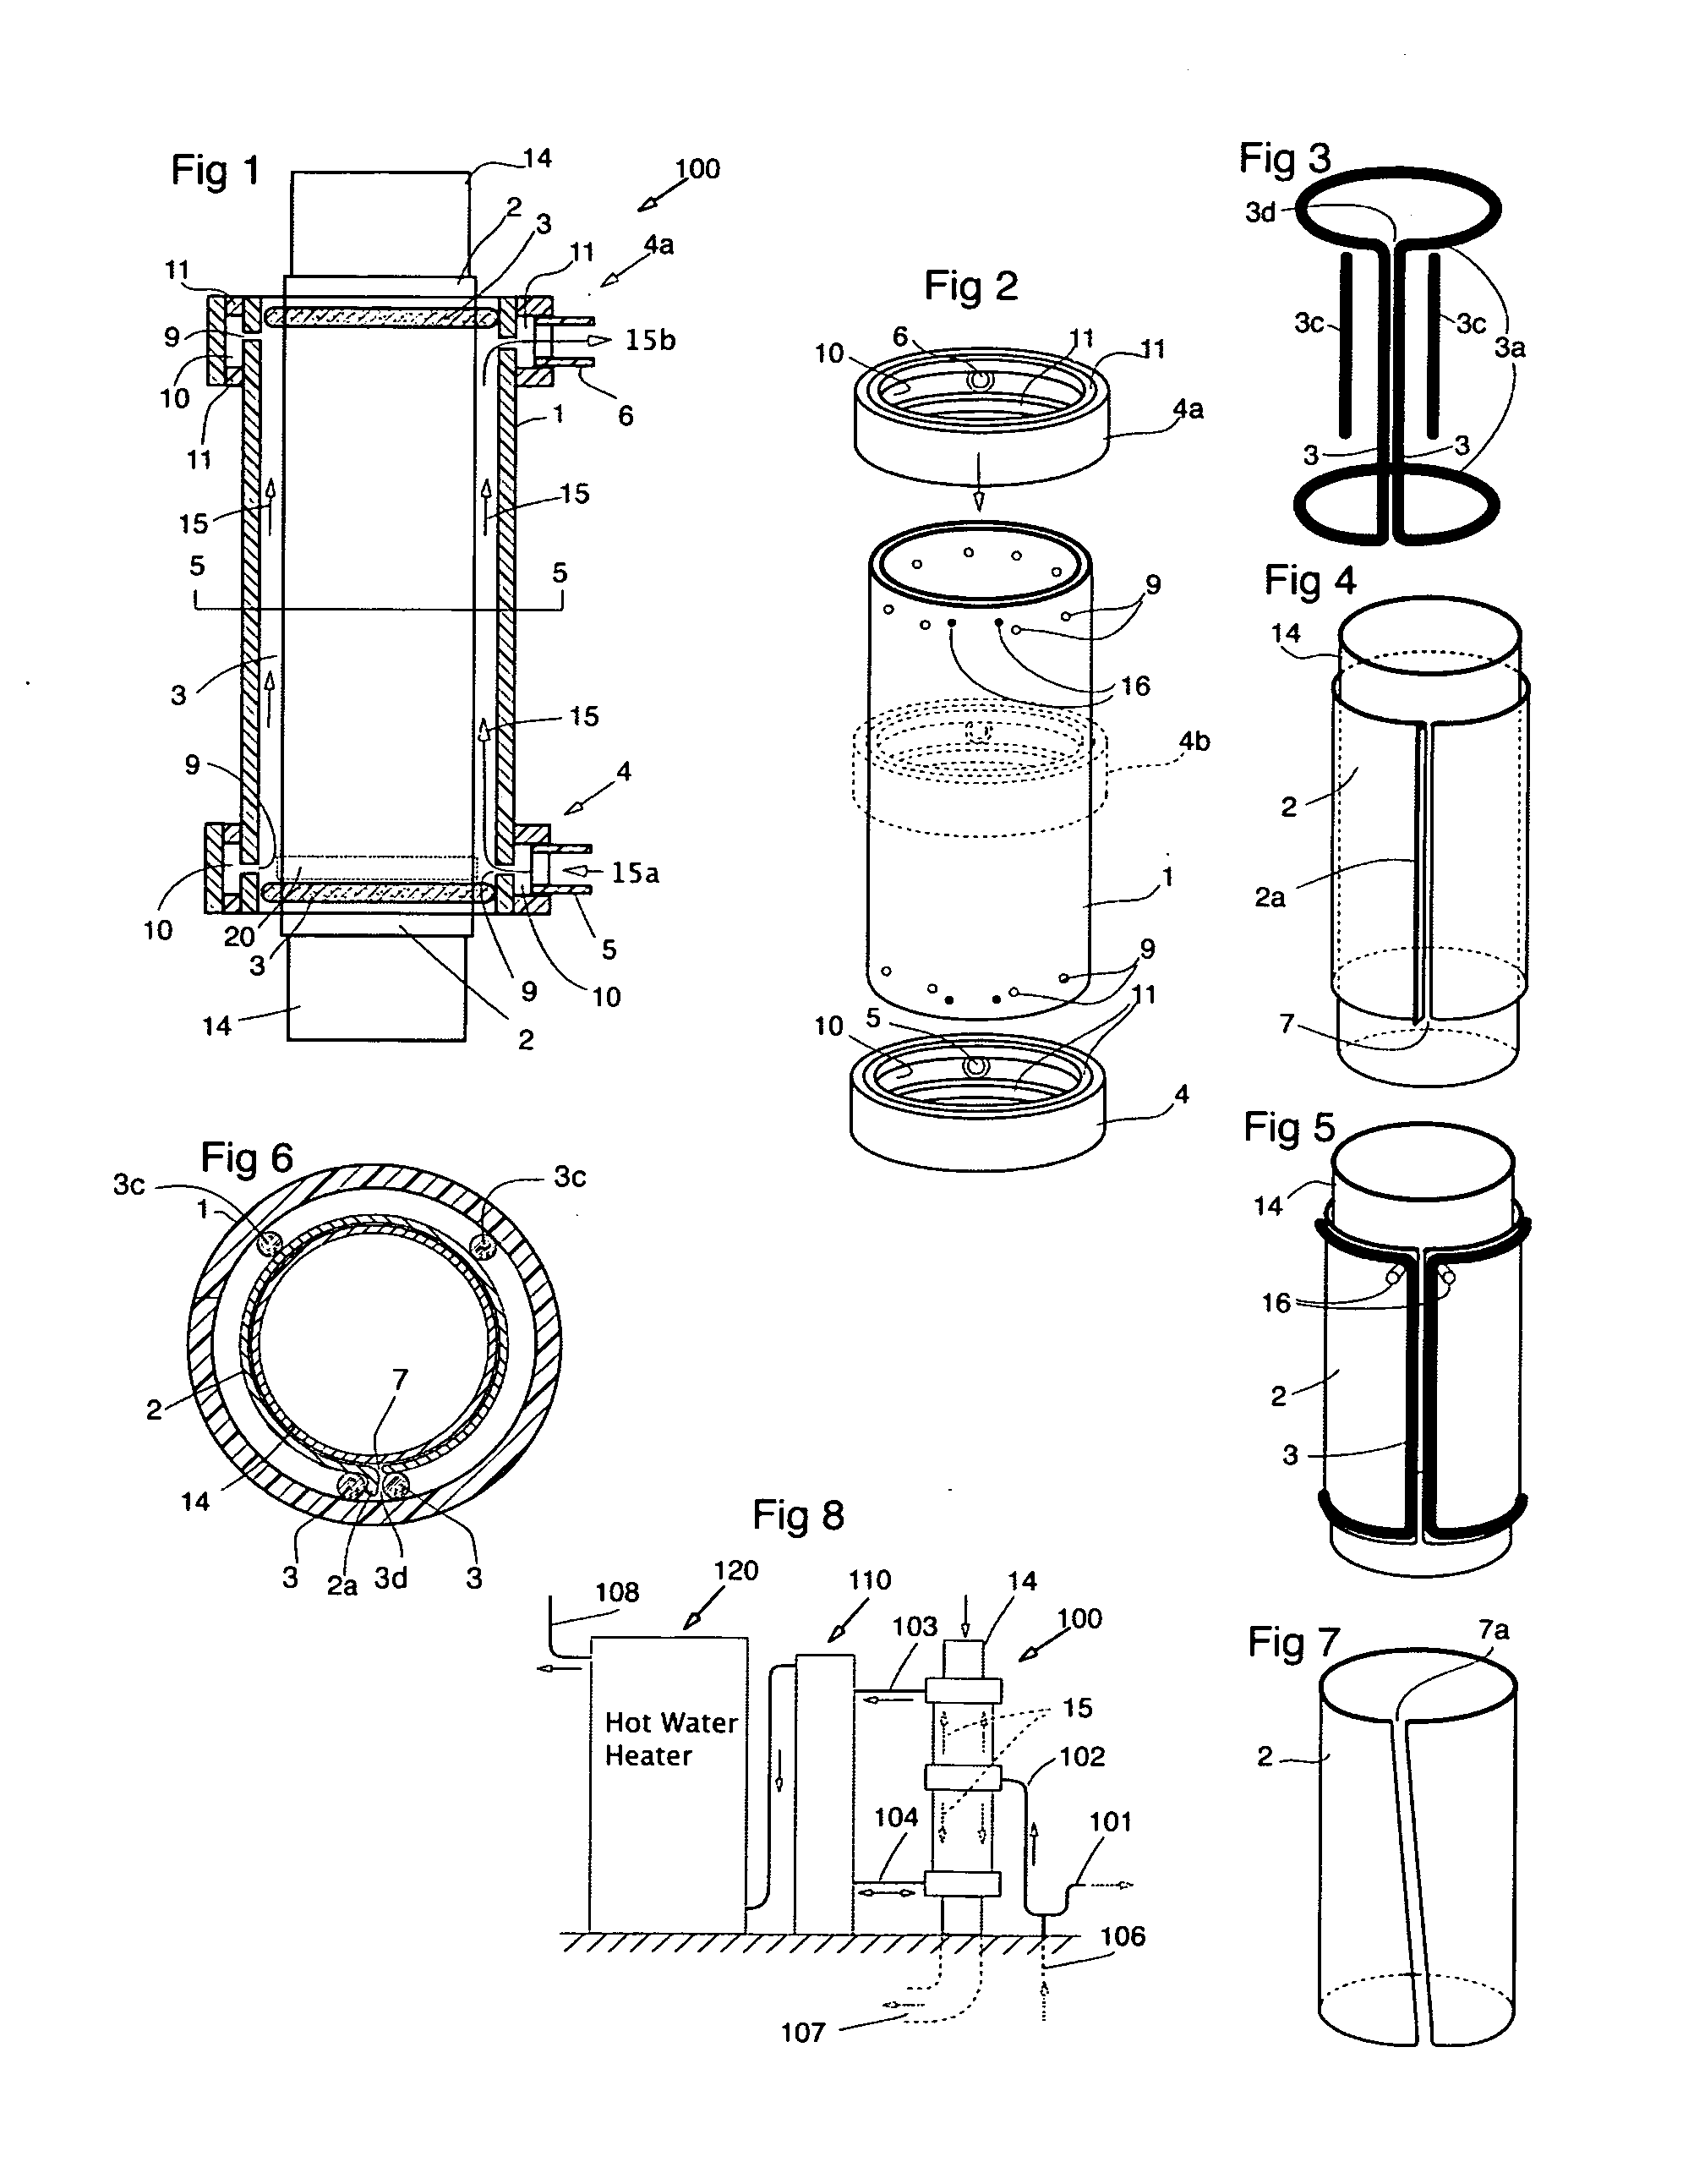 Hybrid vertical drainpipe heat exchanger